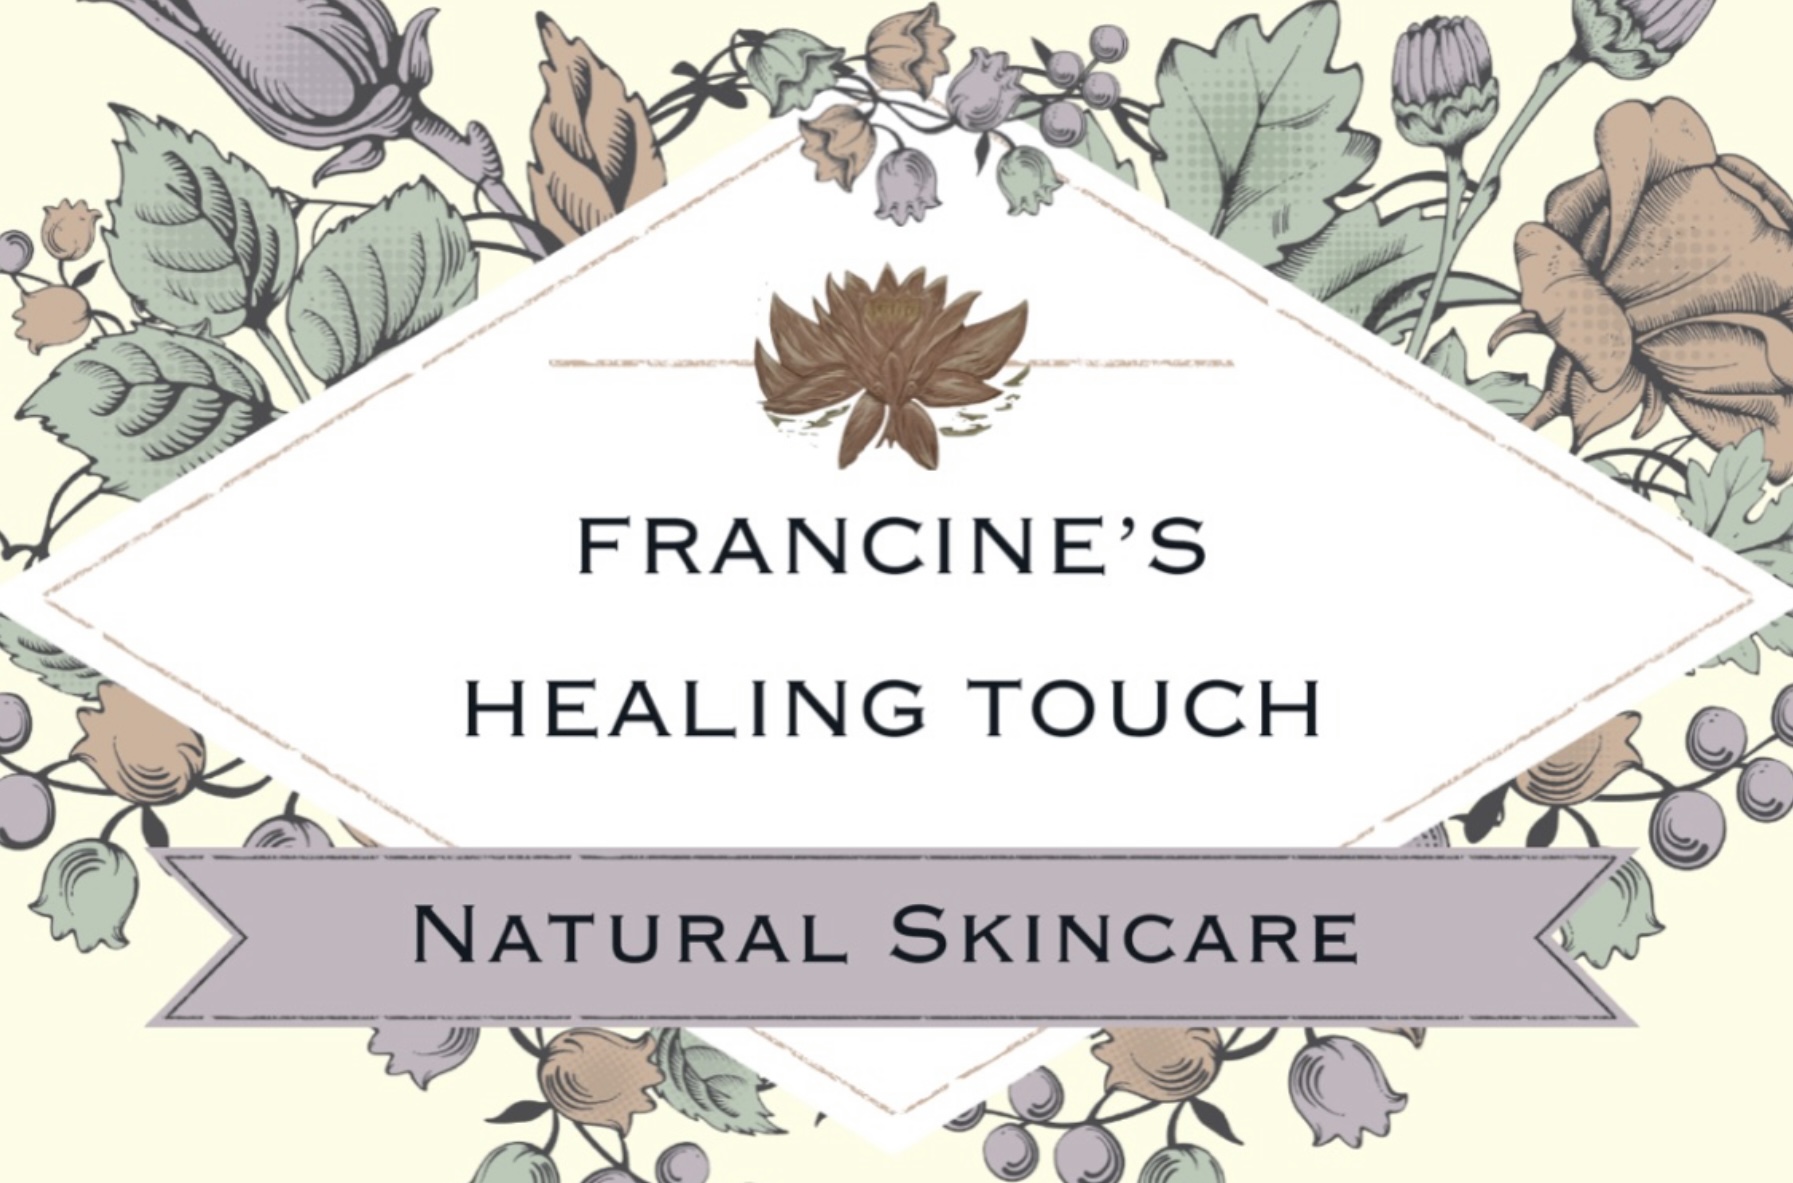 Healing Touch Francine’s Skincare 140 King St, Chappaqua New York 10514